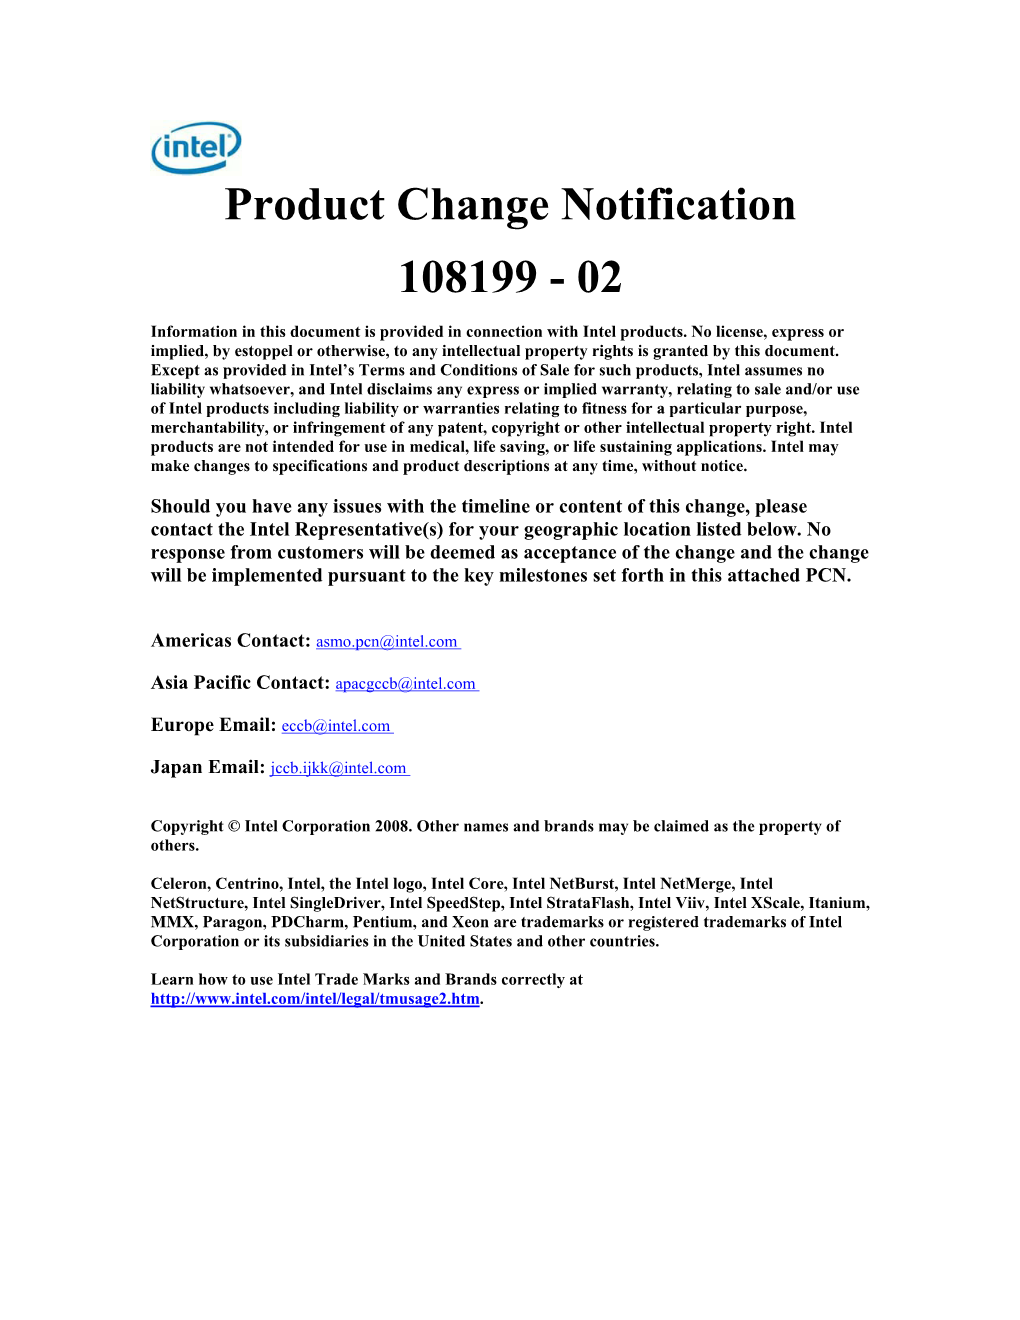 Product Change Notification 108199